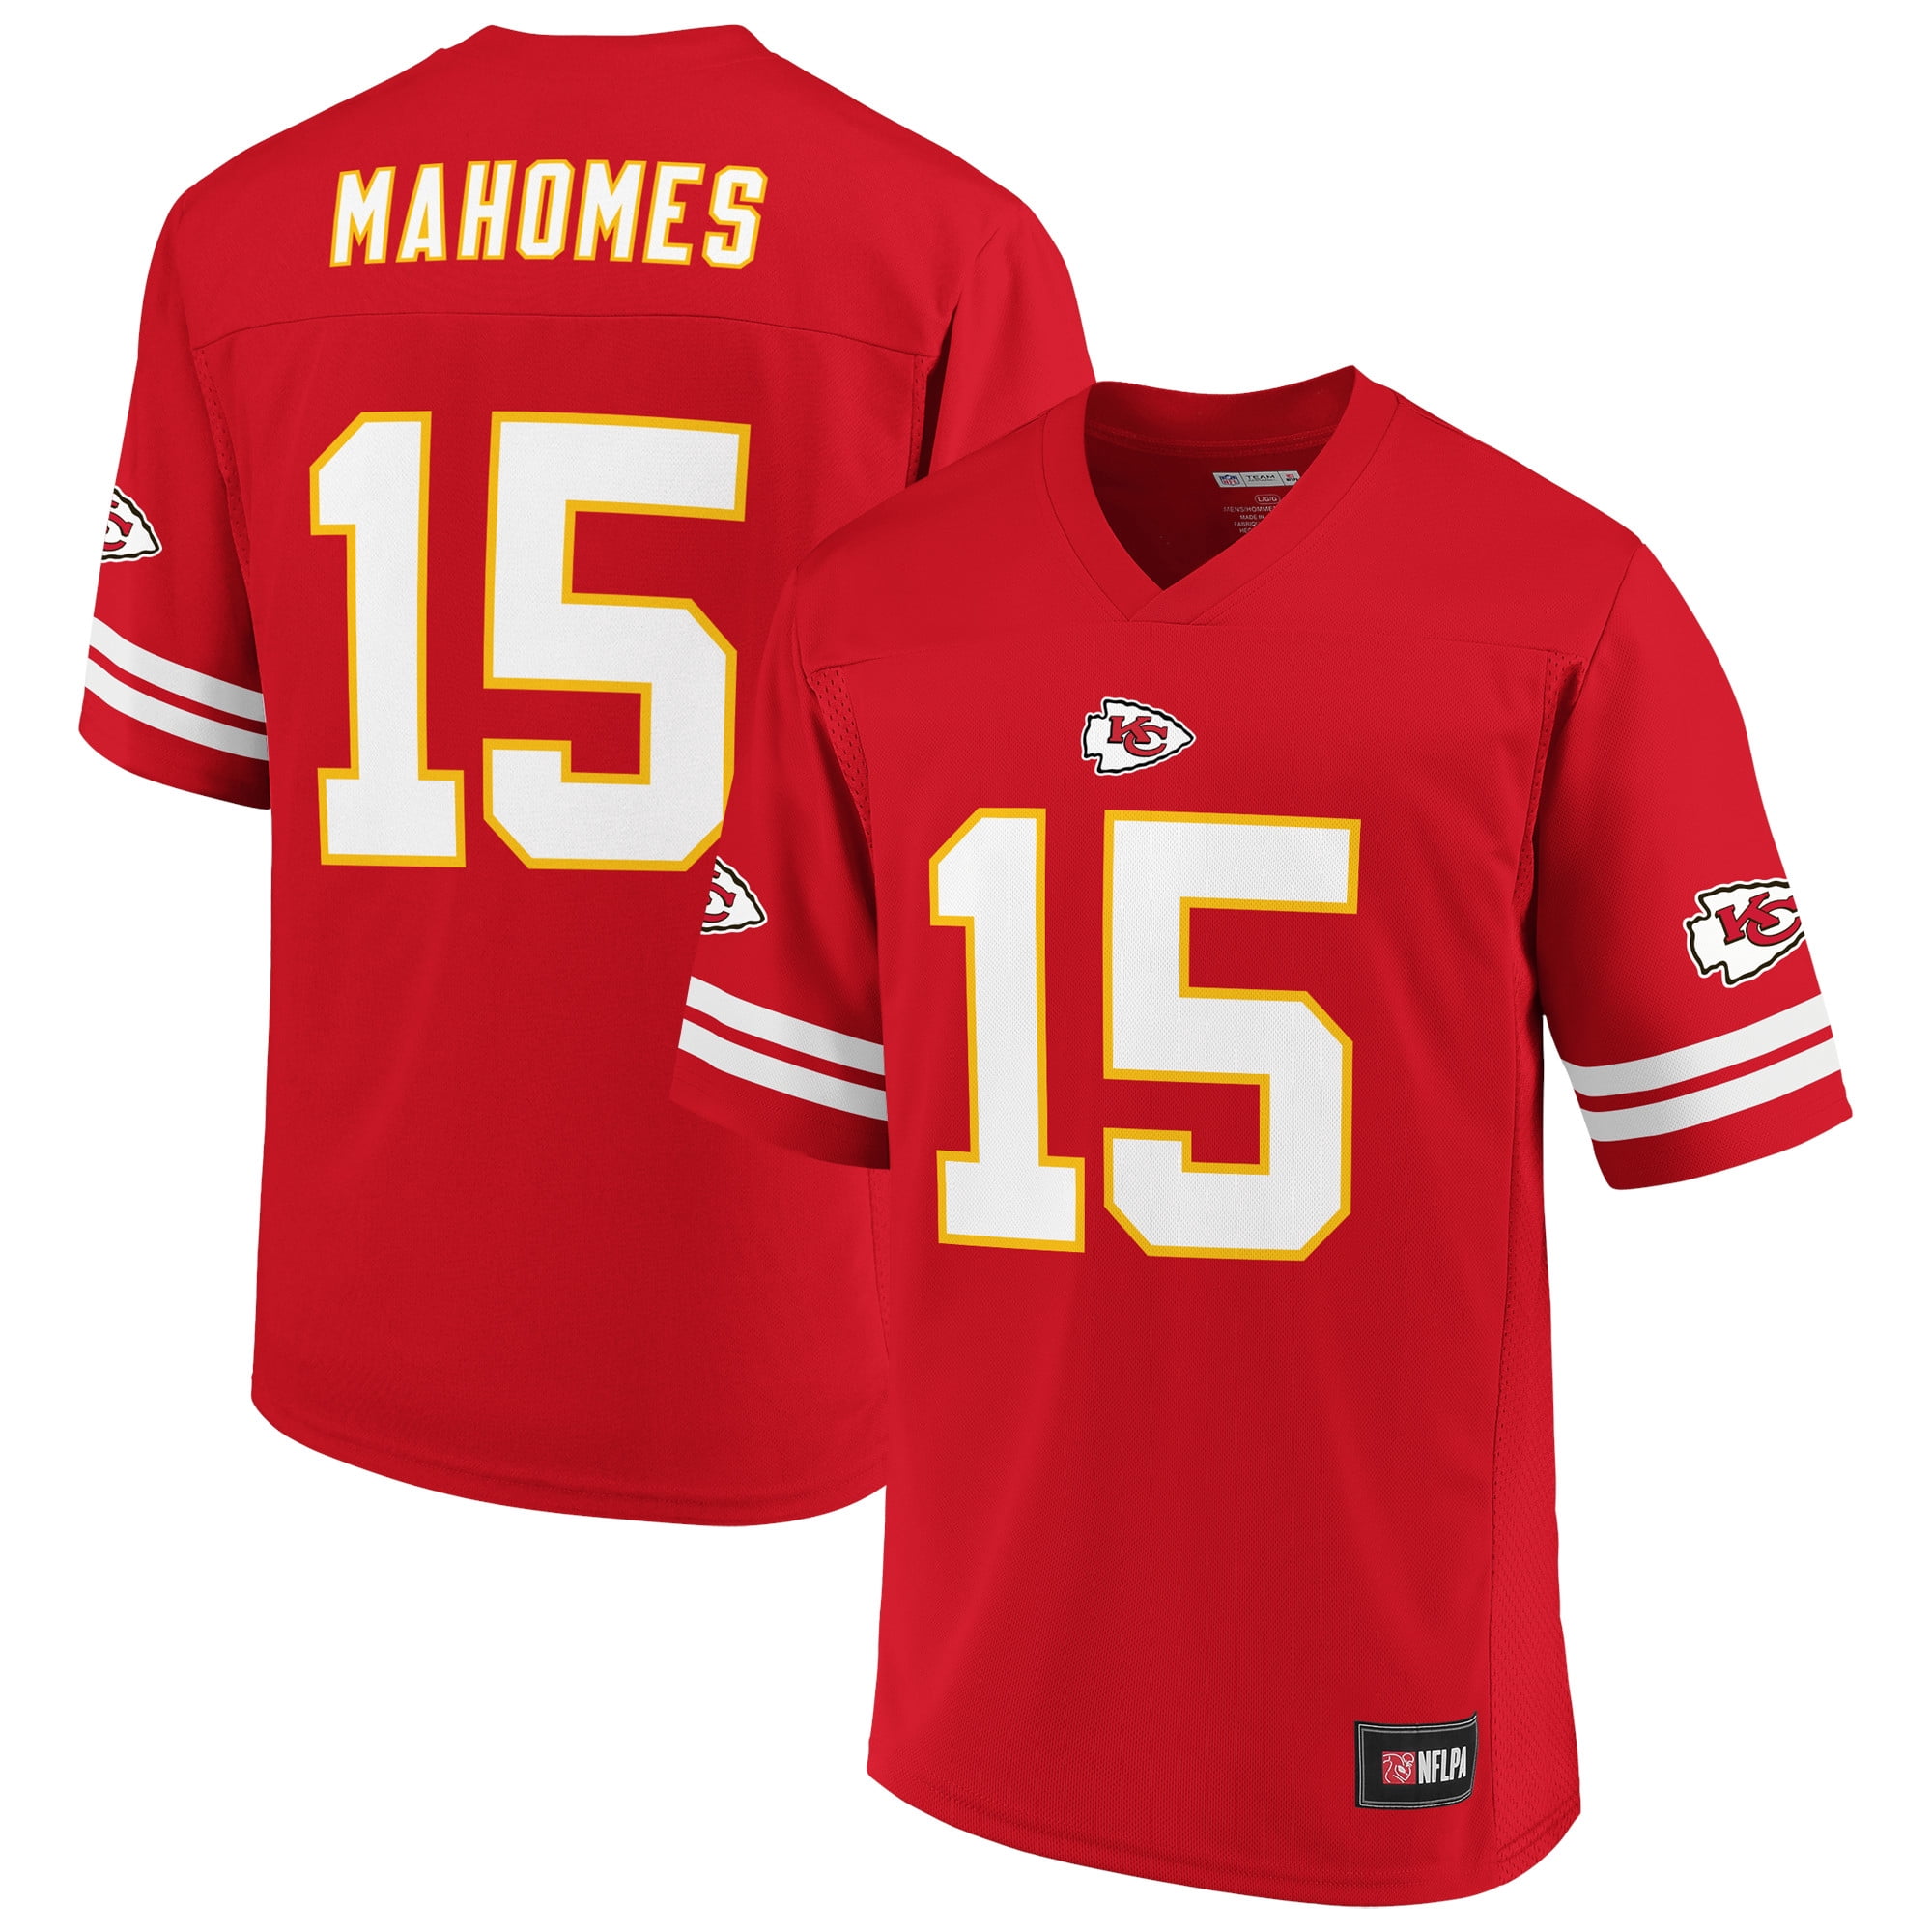 Men's NFL Pro Line by Fanatics Branded Patrick Mahomes Red Kansas City  Chiefs Player Jersey 